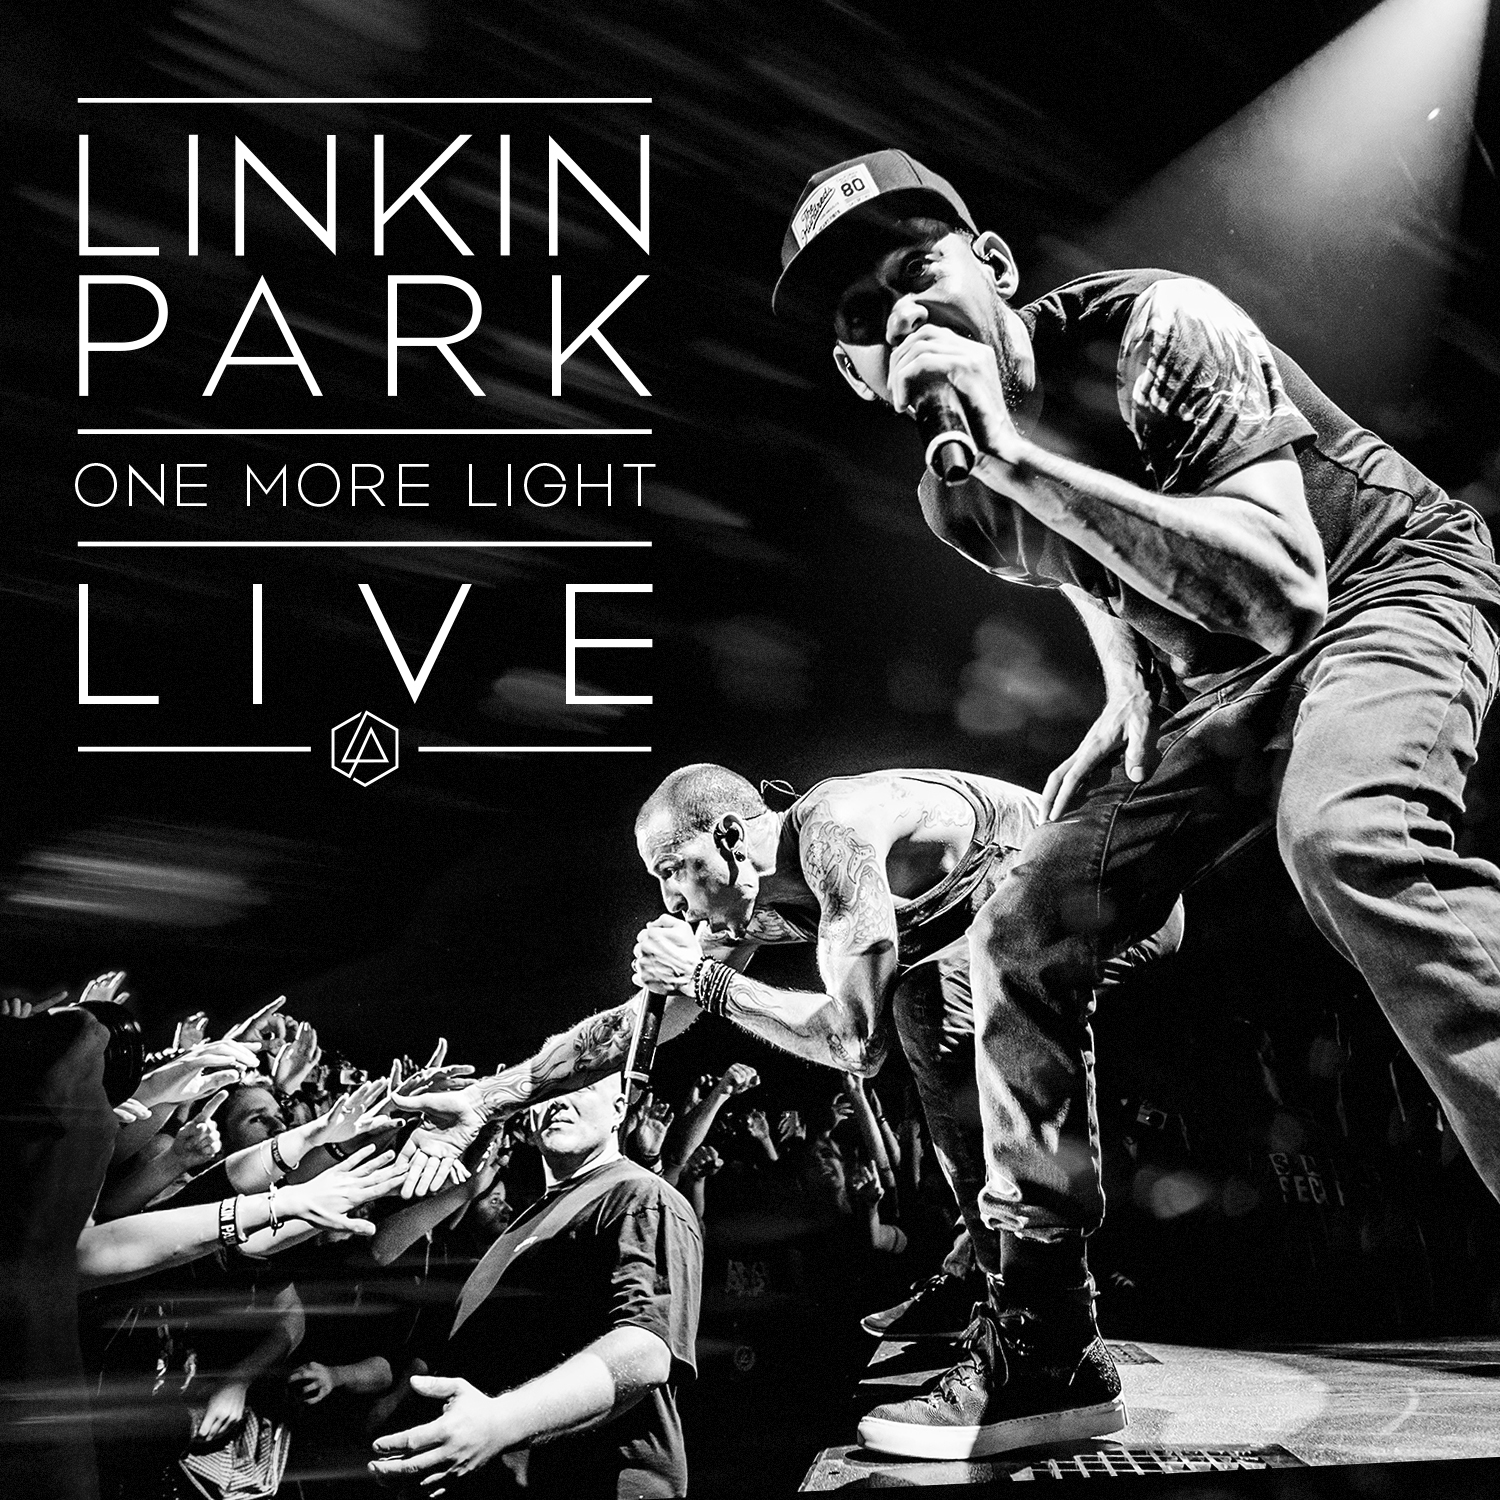 (CD) Live Light Linkin Park - More - One